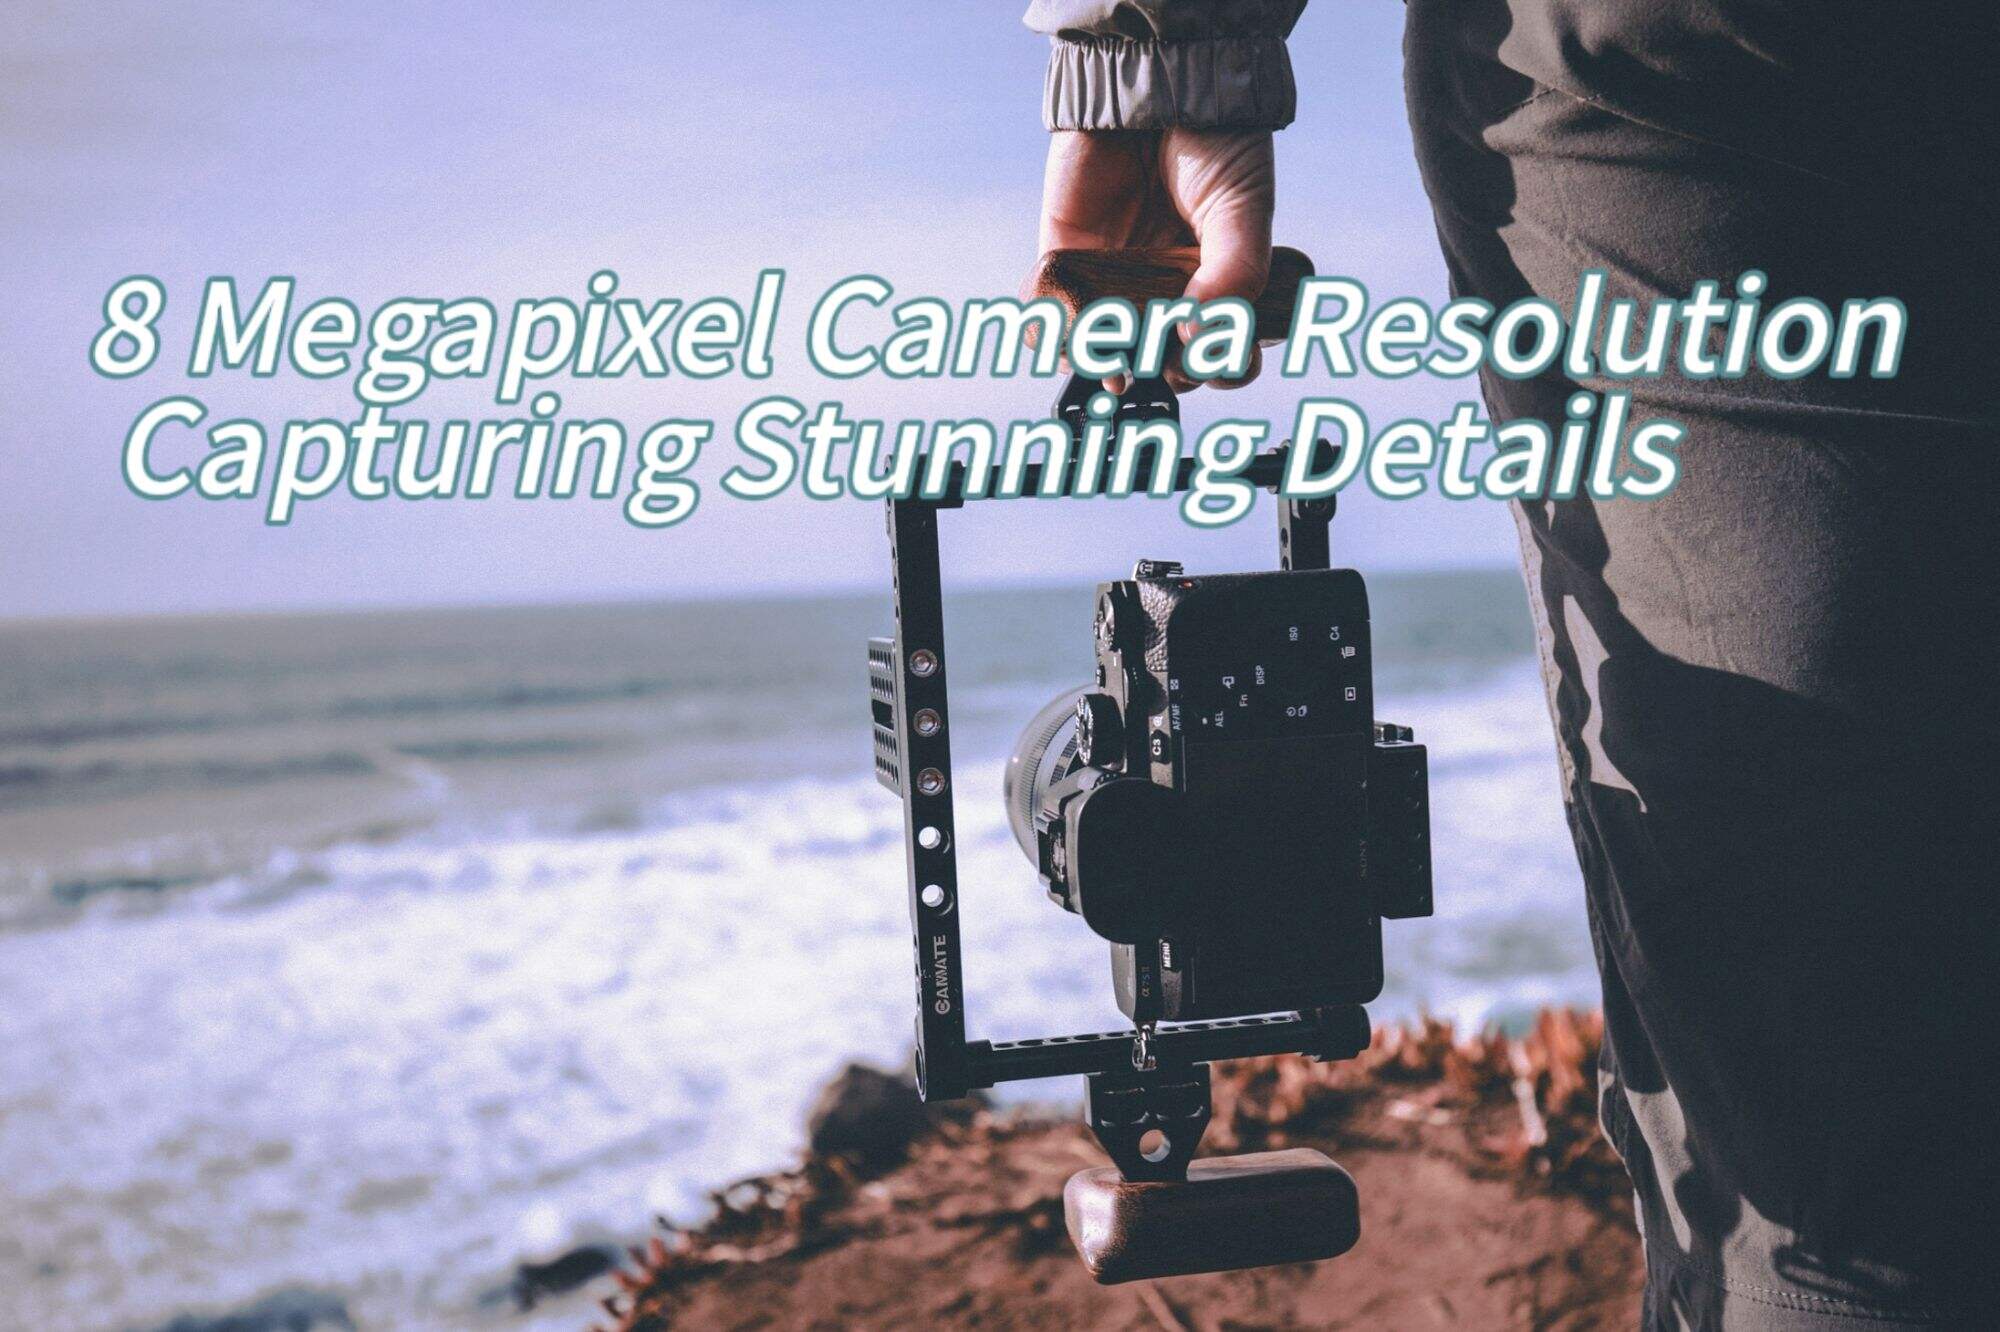 8 Megapixel Camera Resolution: Capturing Stunning Details